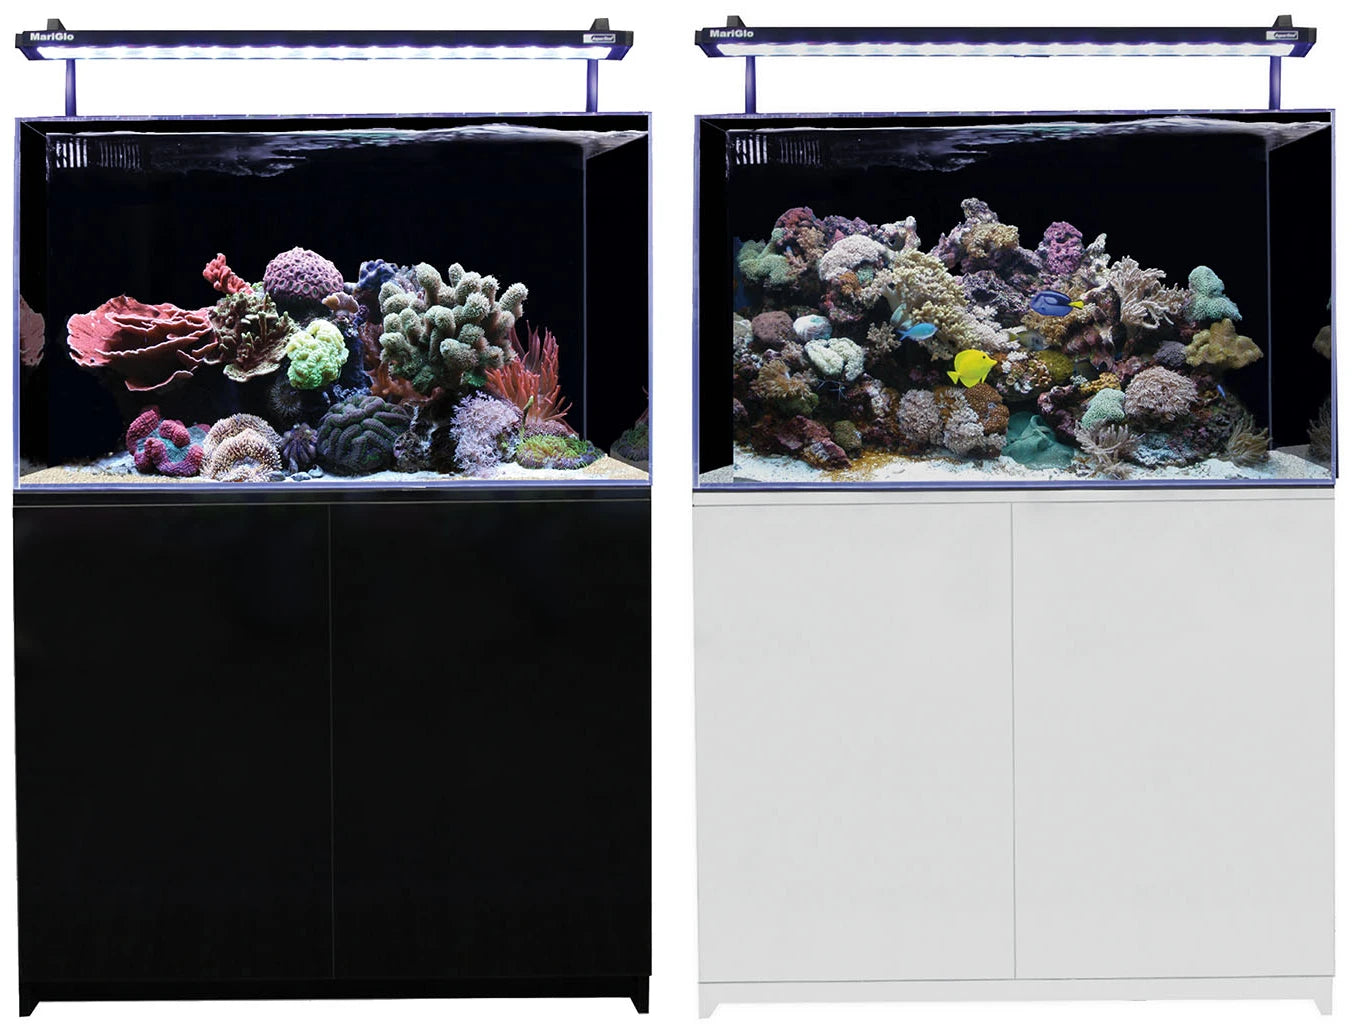 Mini Reef 160 salt water aquarium - Fish and Feather